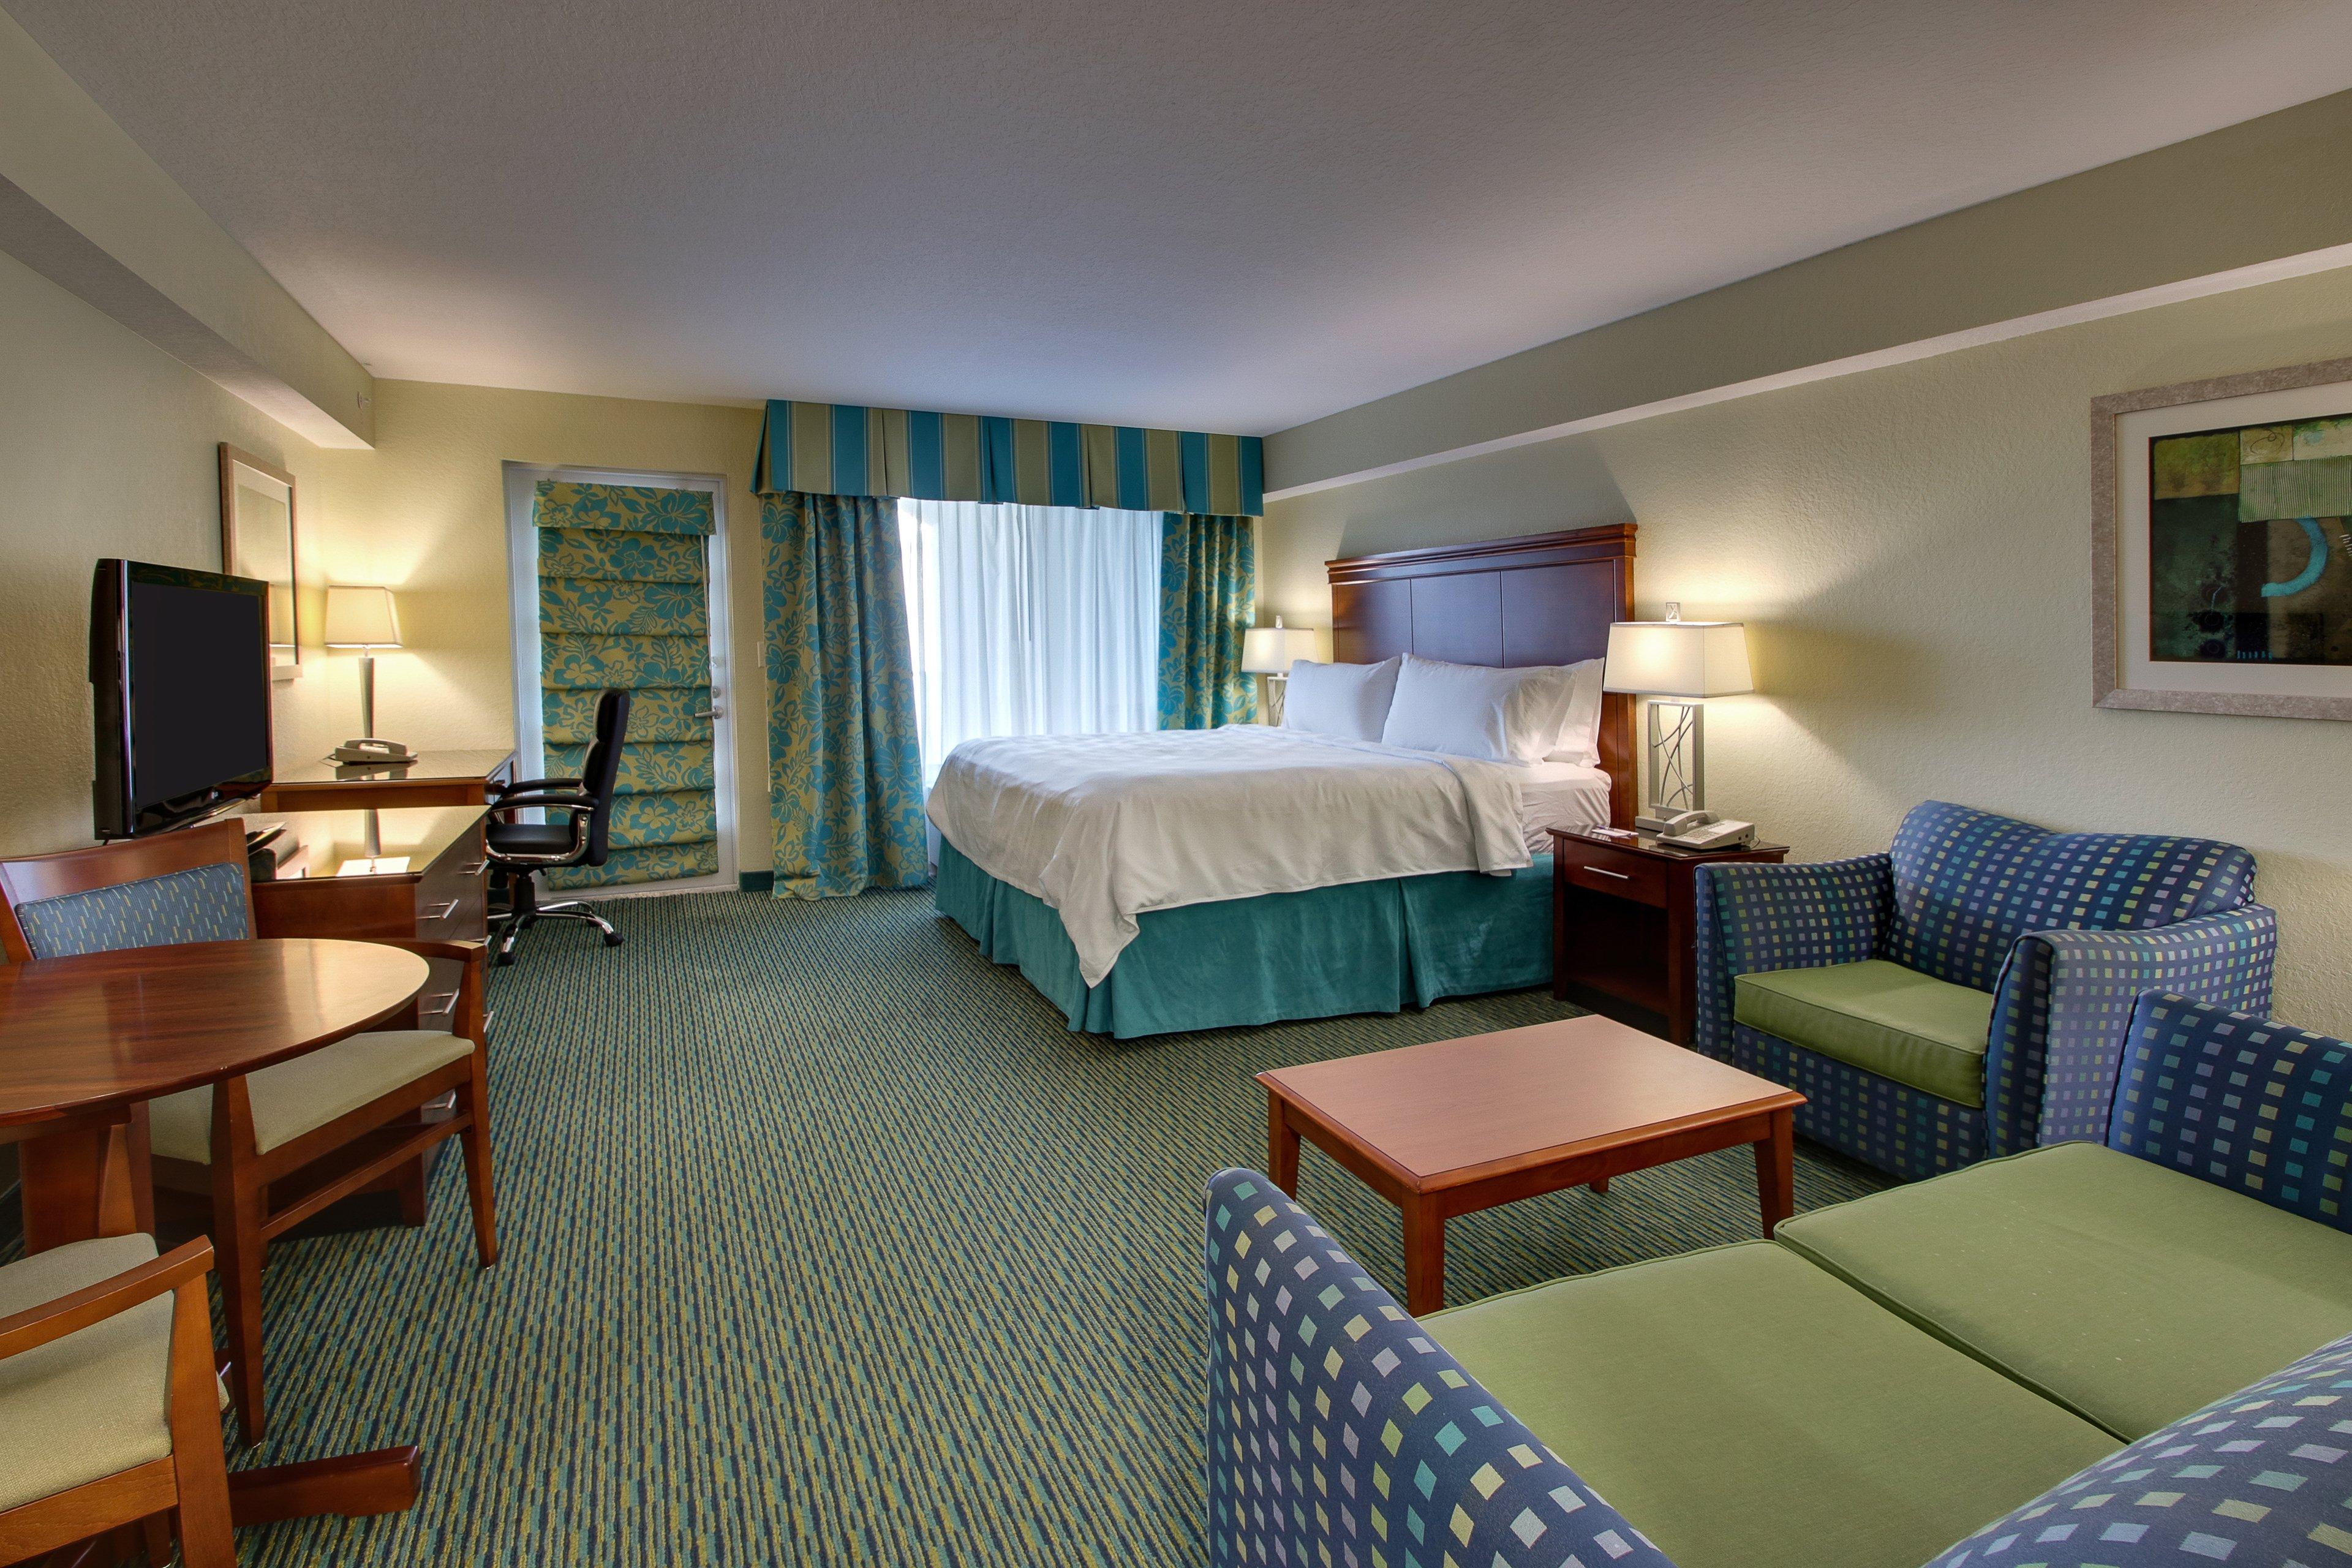 Holiday Inn Resort Lake Buena Vista